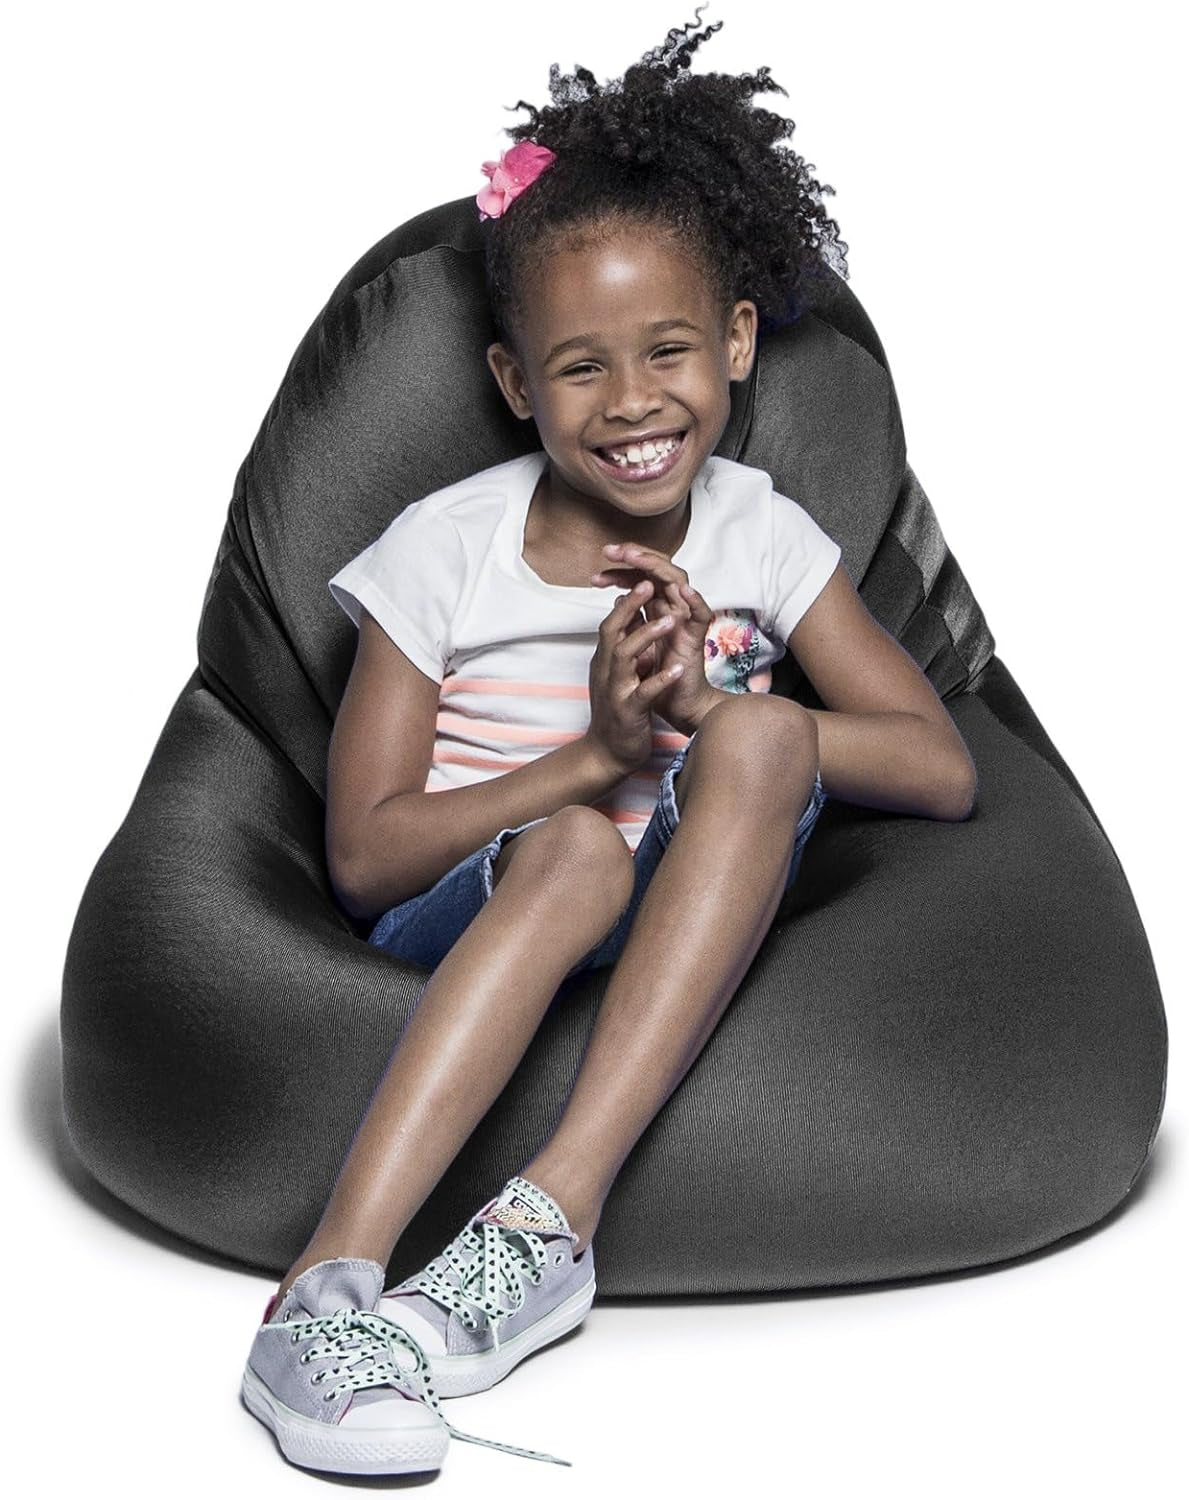 Nimbus Spandex Bean Bag Chair Furniture for Kids Rooms, Playrooms, and More, Small, Royal Blue